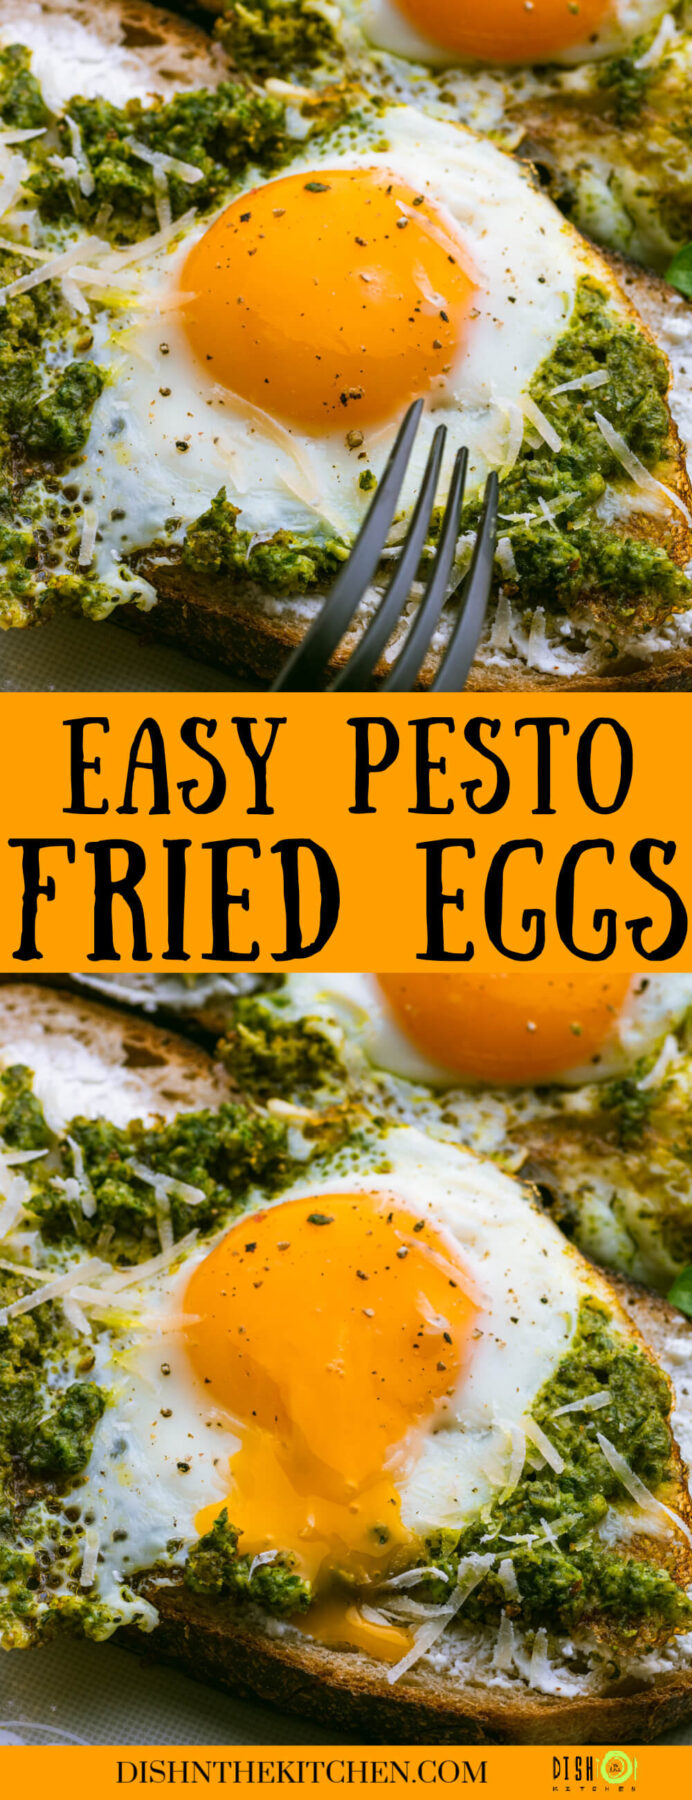 Pinterest image showing fried Pesto Eggs sunny side up nestled in green pesto.